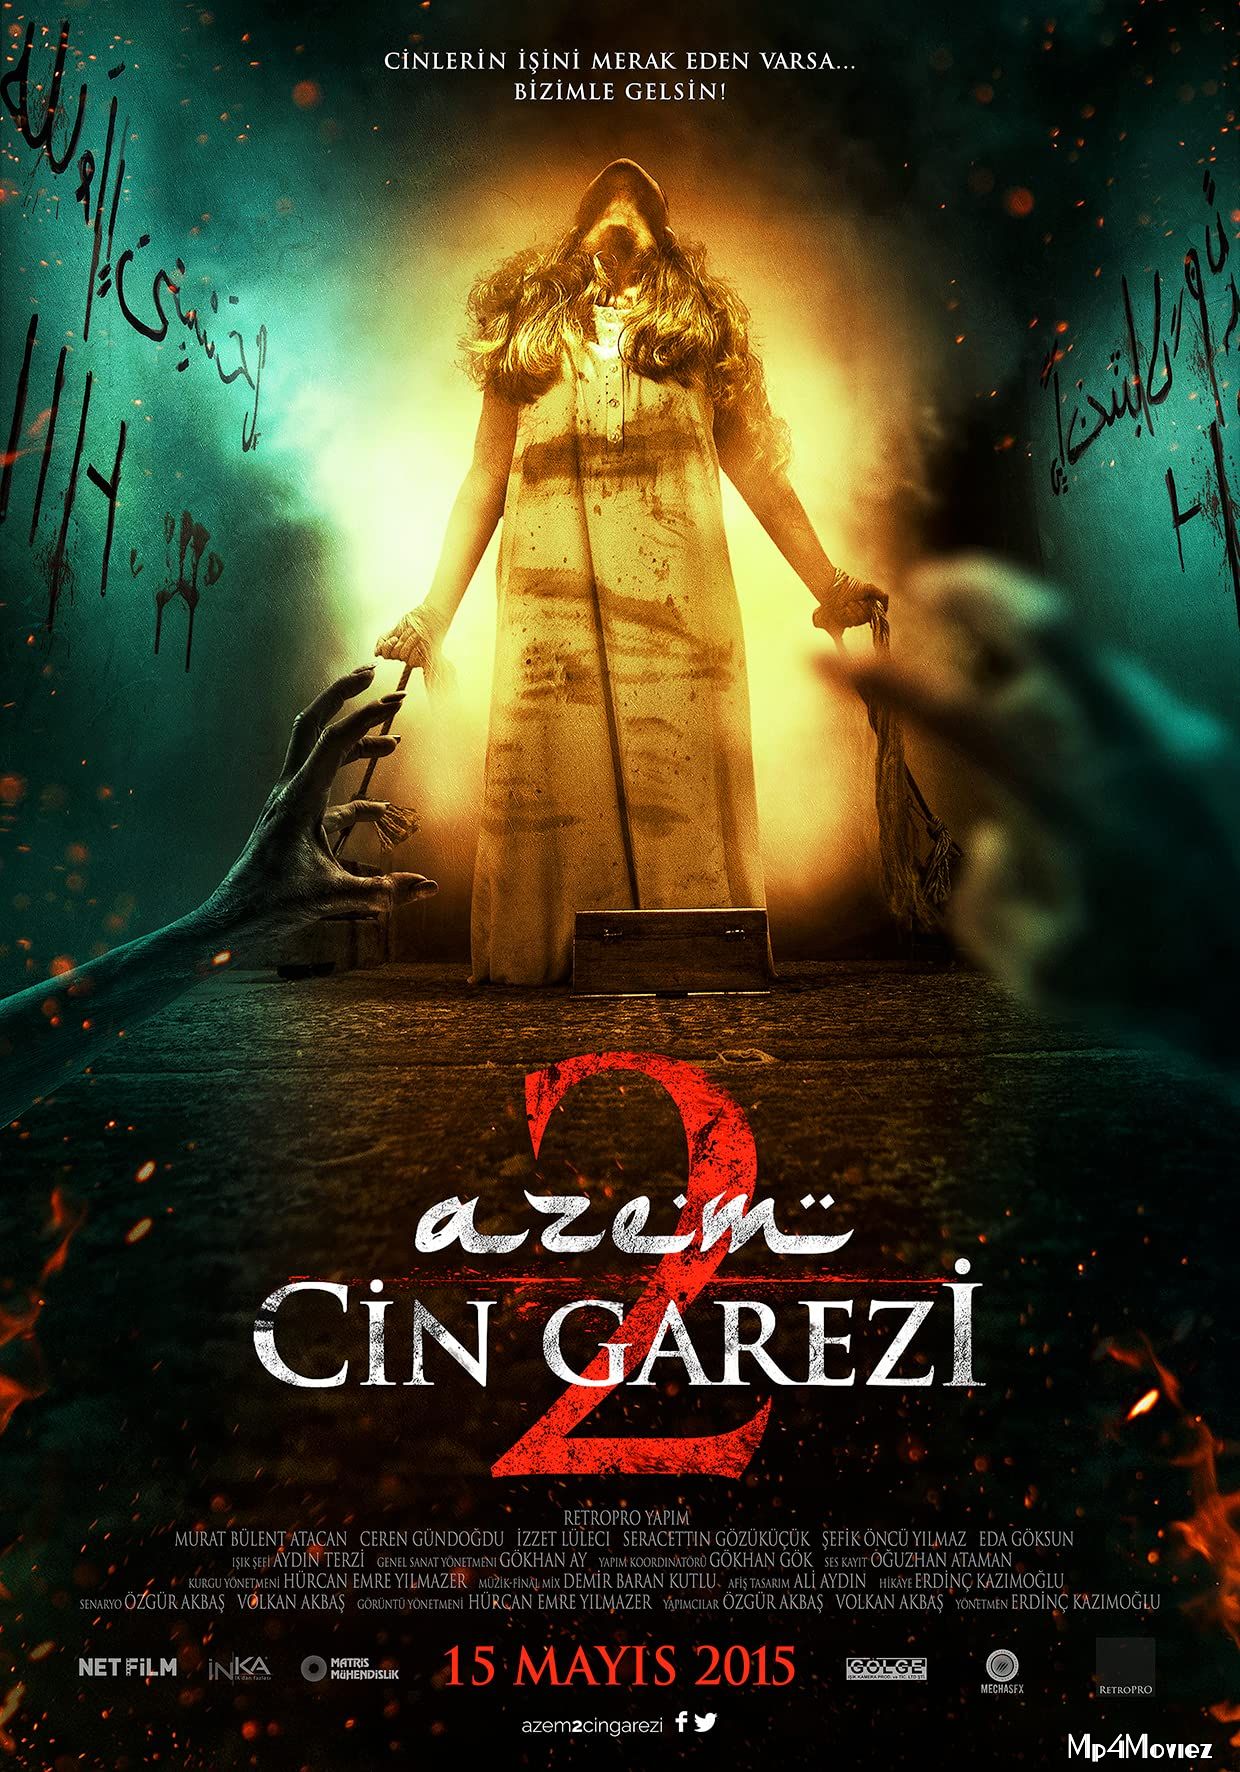 Azem 2 Cin Garezi 2015 Hindi Dubbed Full Movie download full movie